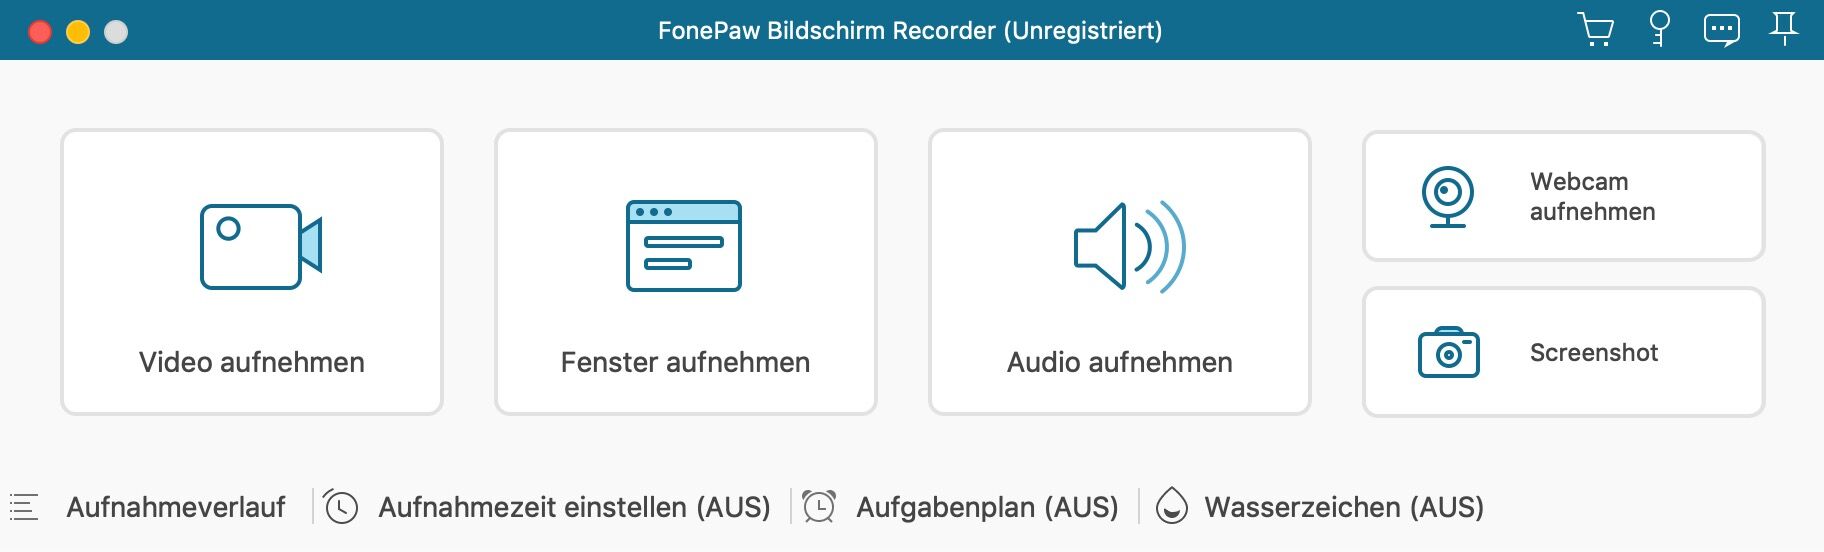 FonePaw Bildschirm Recorder